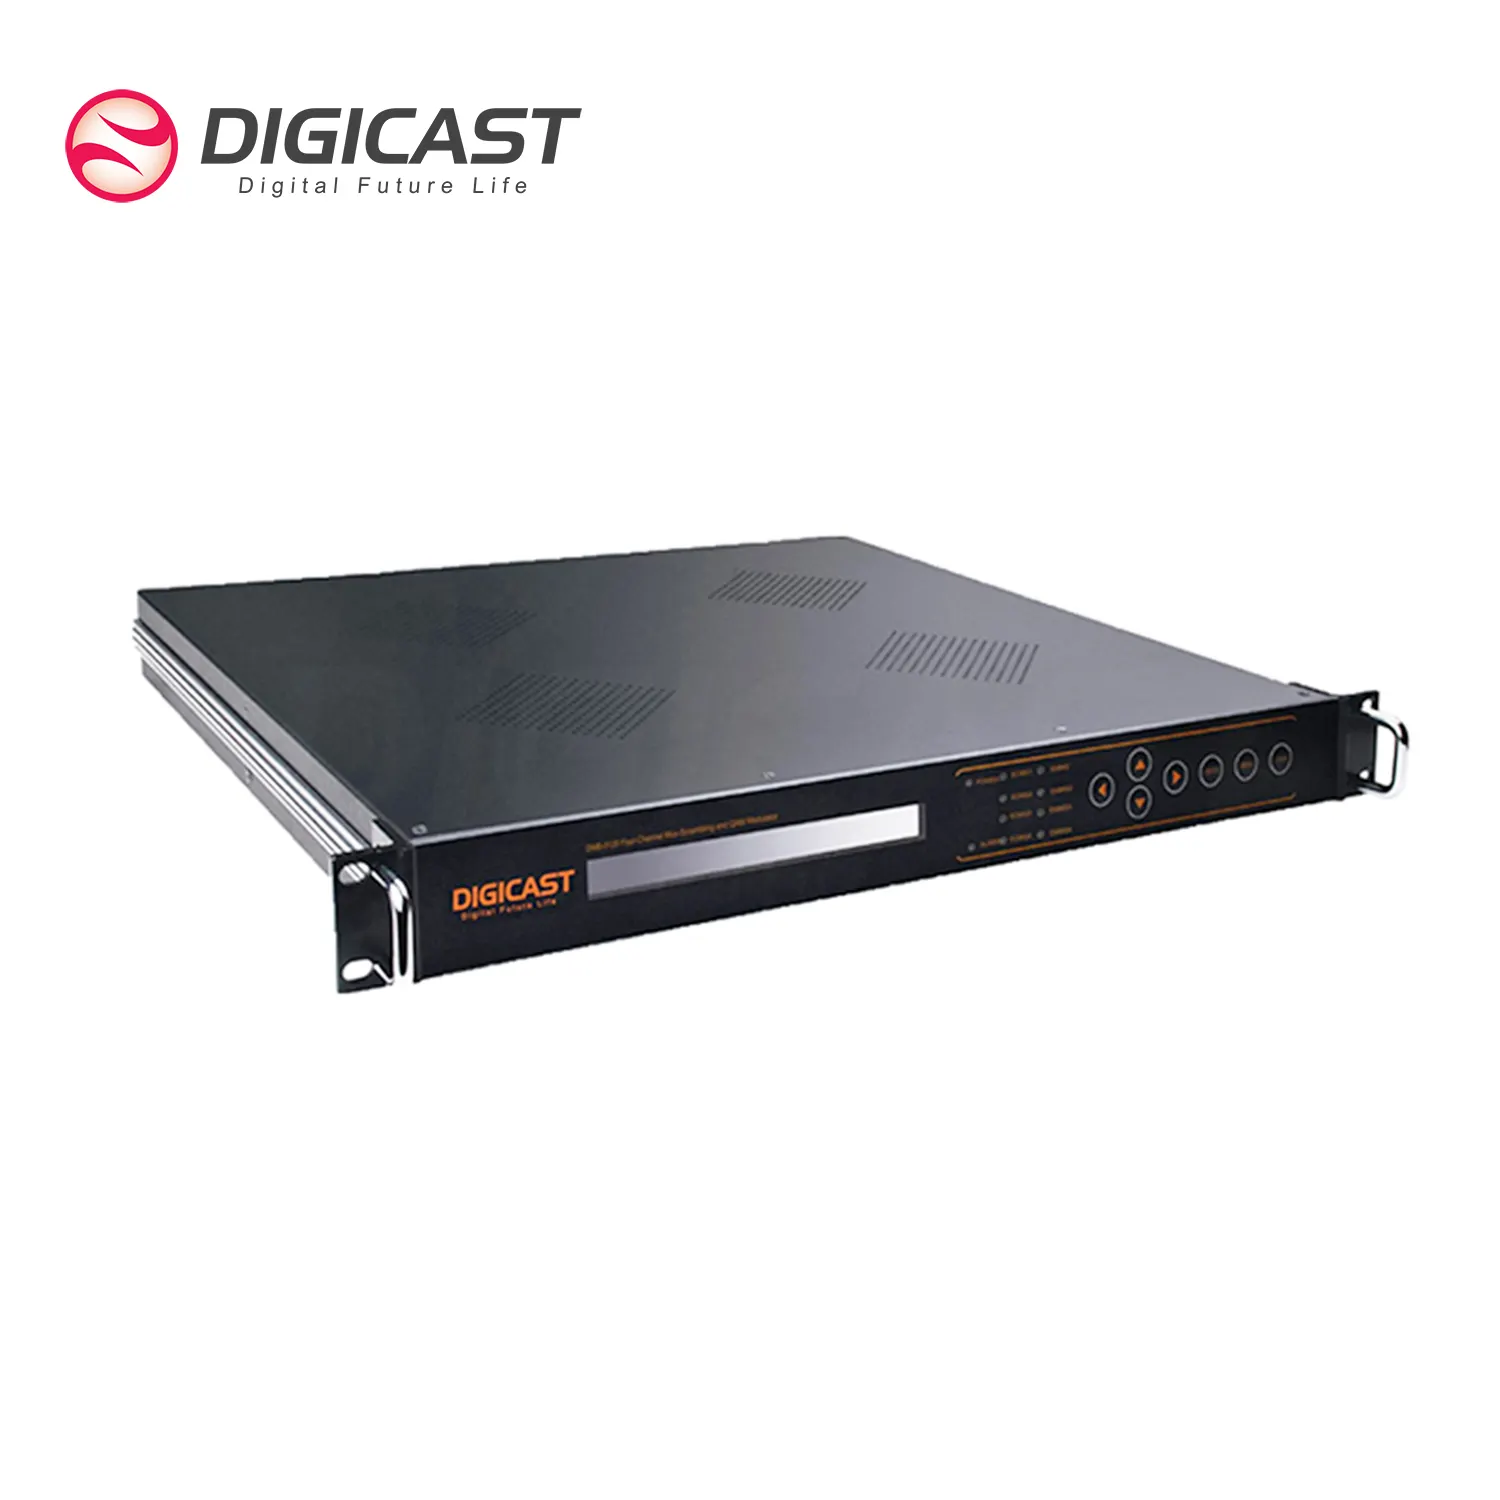 DVB-S DVB-S2 DVB-S2X Modulator พร้อม Biss สำหรับระบบดาวเทียมออกอากาศแบบดิจิตอล